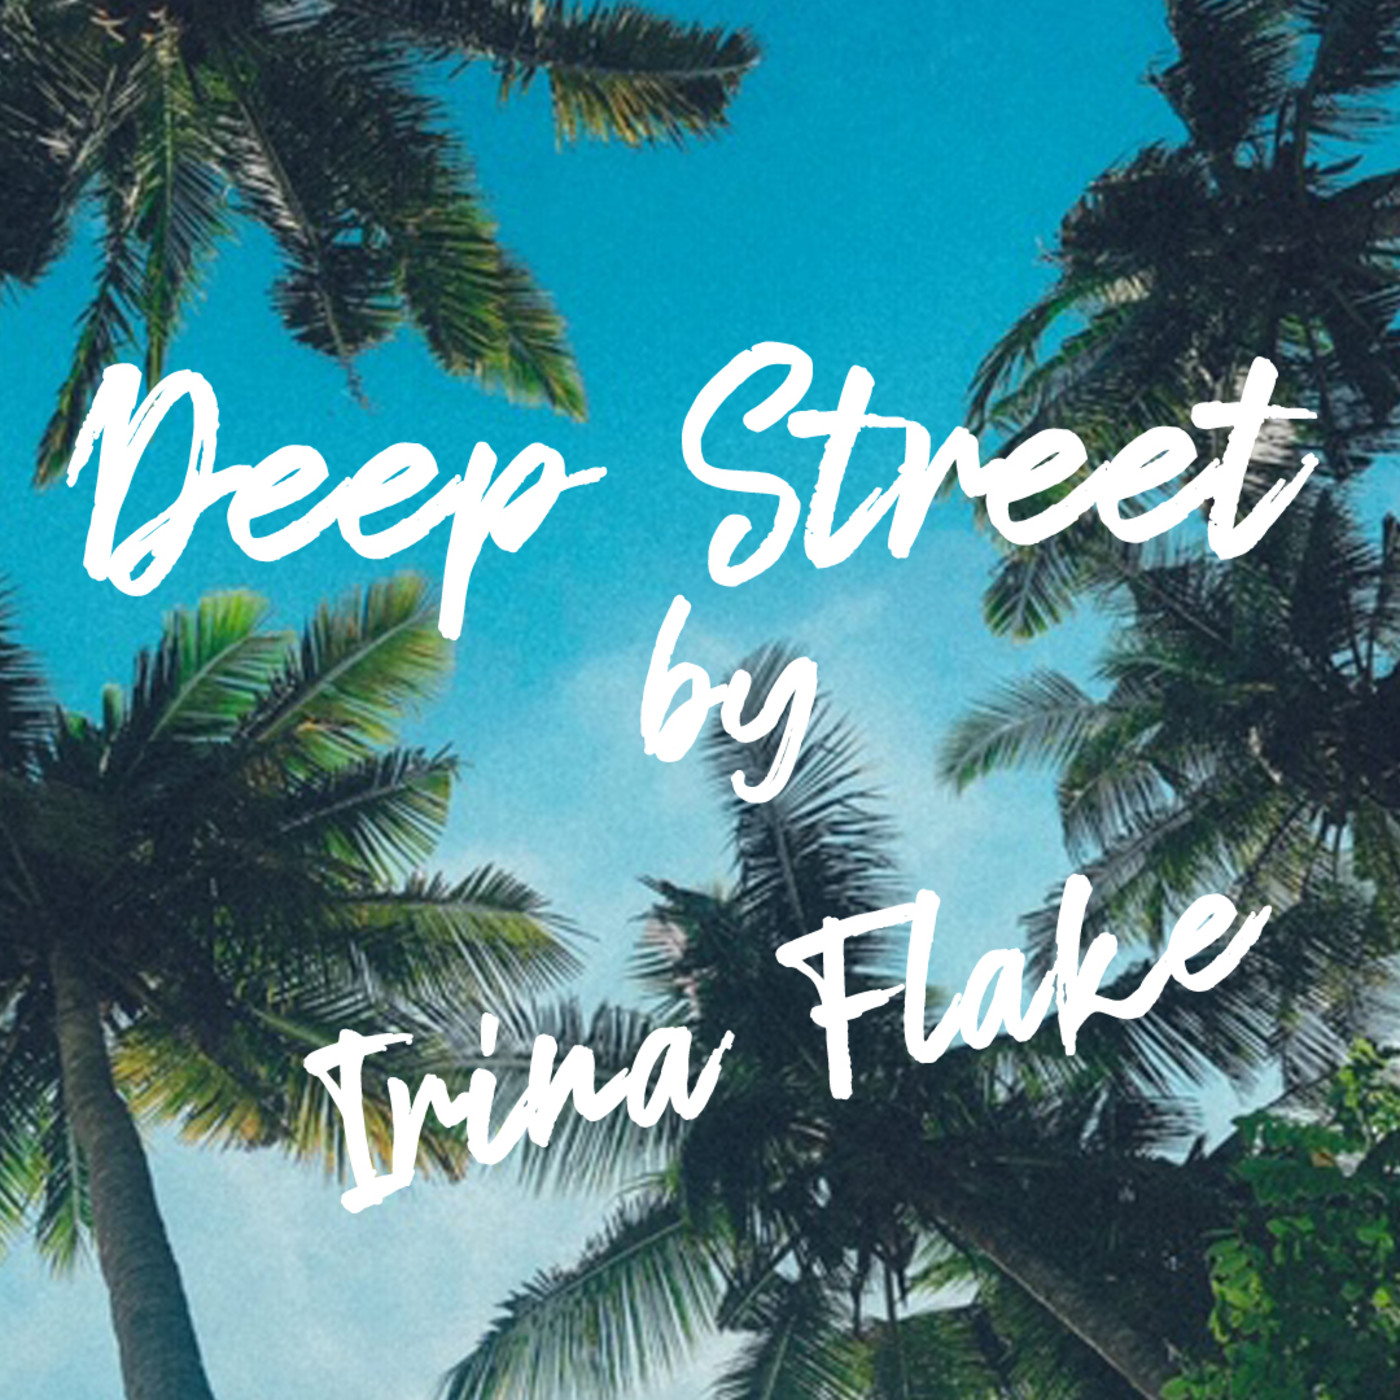 Deep Street by Irina Flake 08 @ Flaix FM 19.05.19